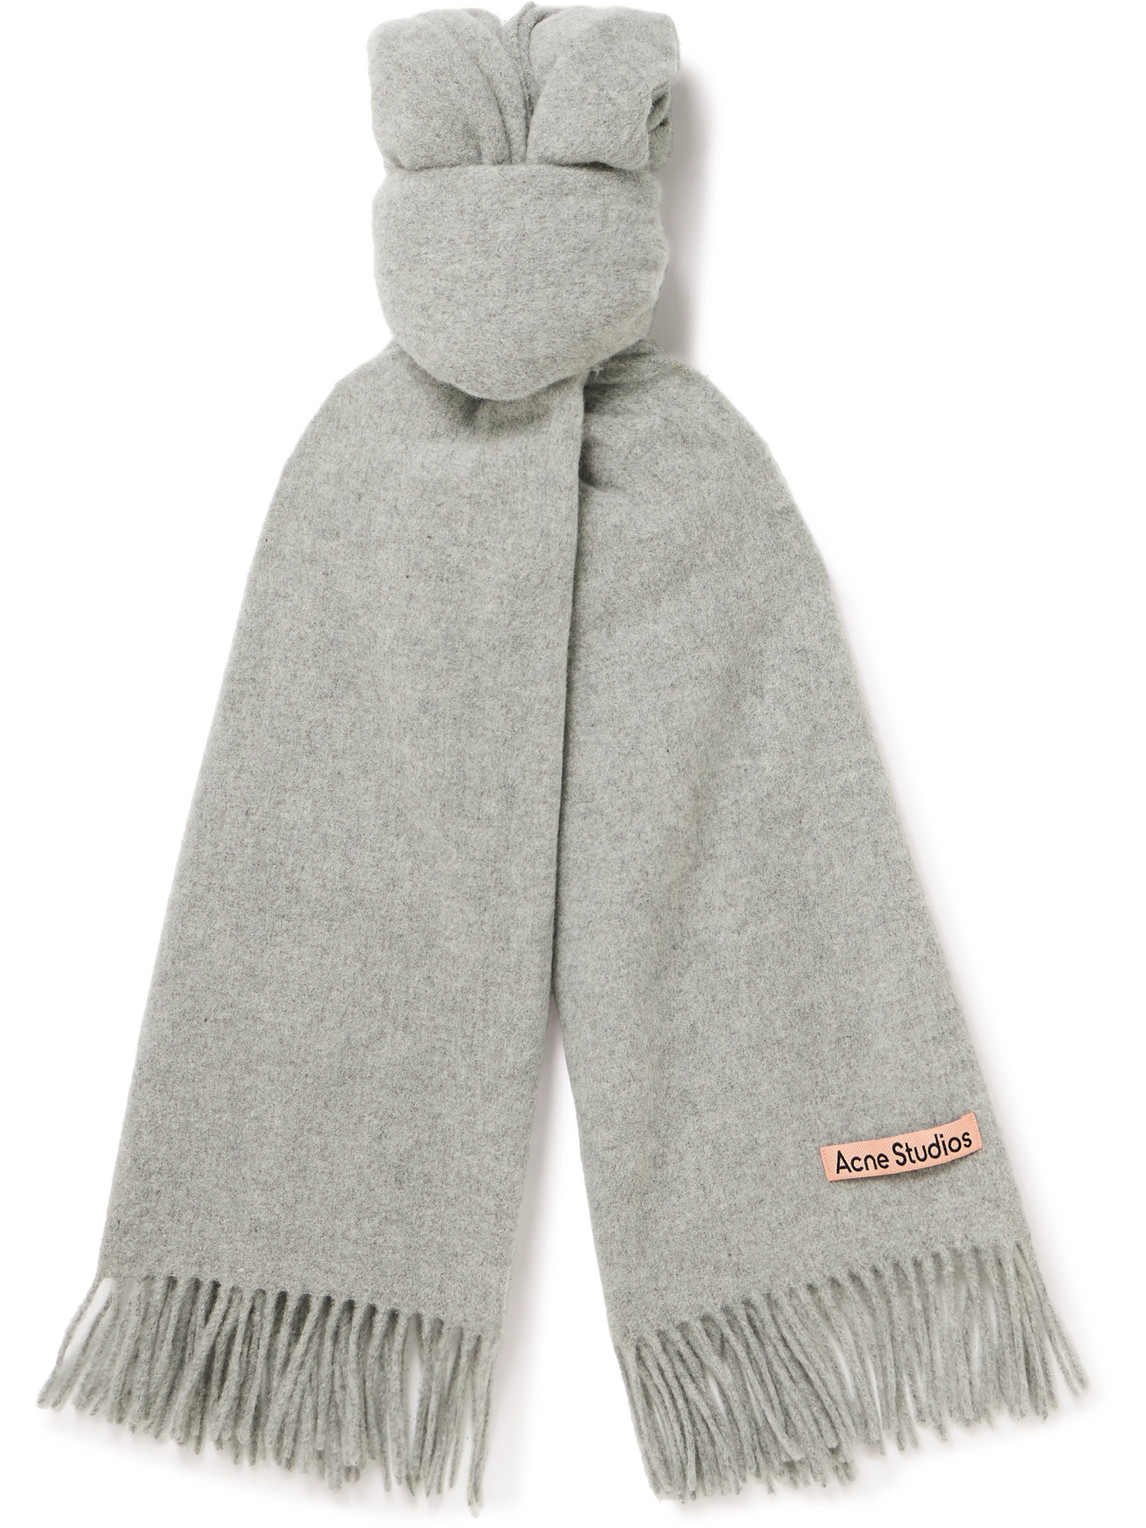 Acne Studios Canada Fringed Wool Scarf In Gray